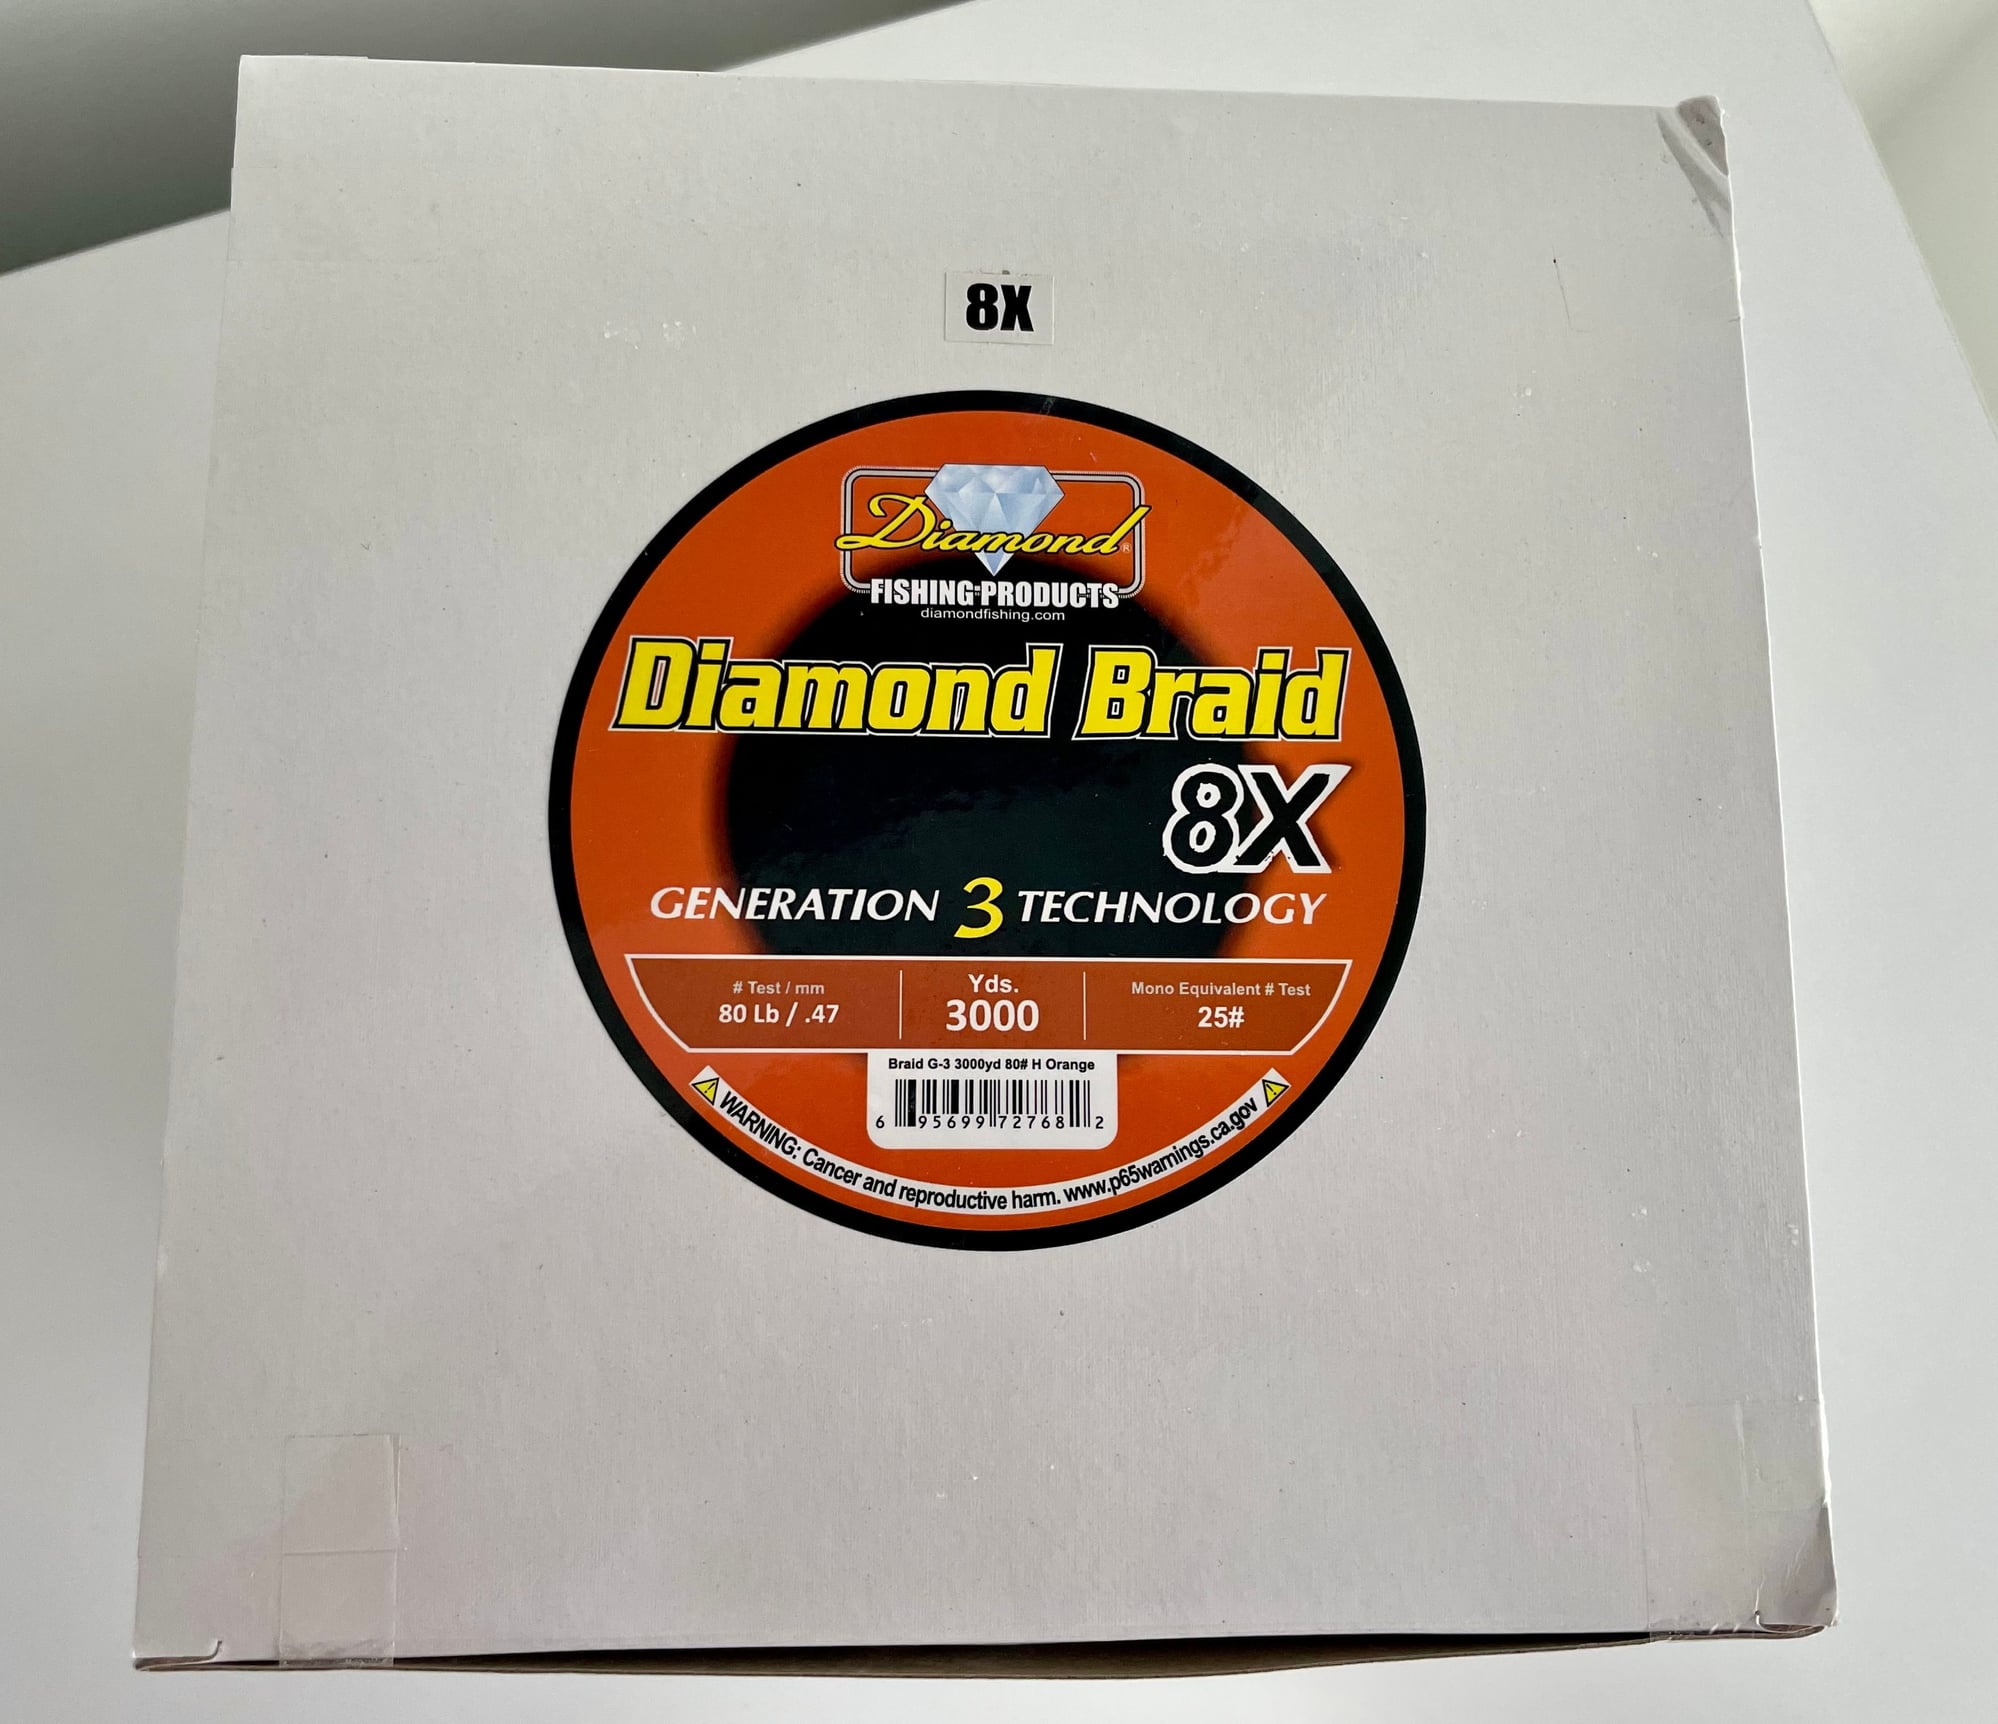 Diamond braid Gen3 8x - The Hull Truth - Boating and Fishing Forum